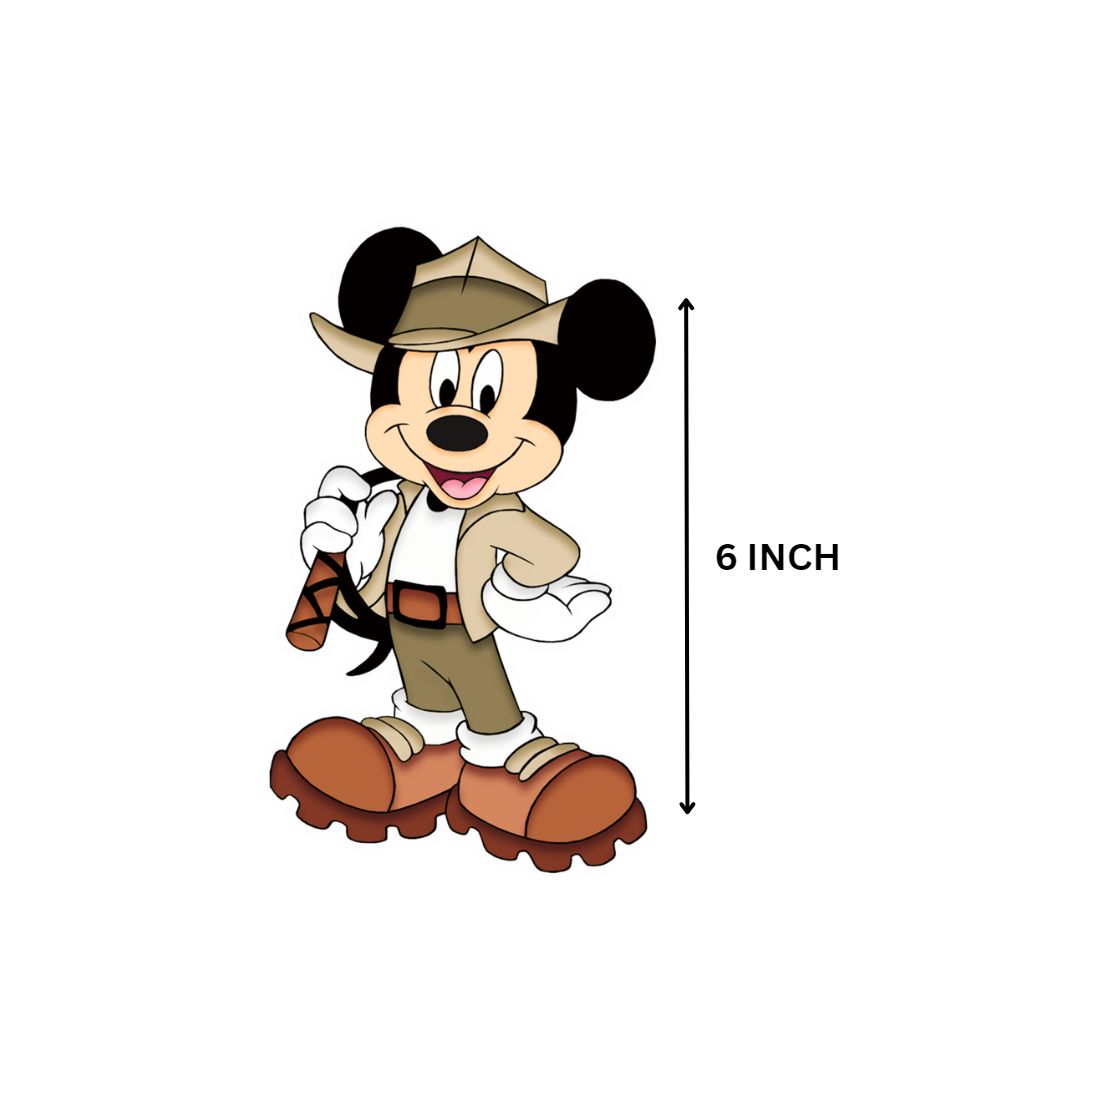 Mickey Safari Theme Cutout (6 inches/250 GSM Cardstock/Mixcolour/12Pcs)